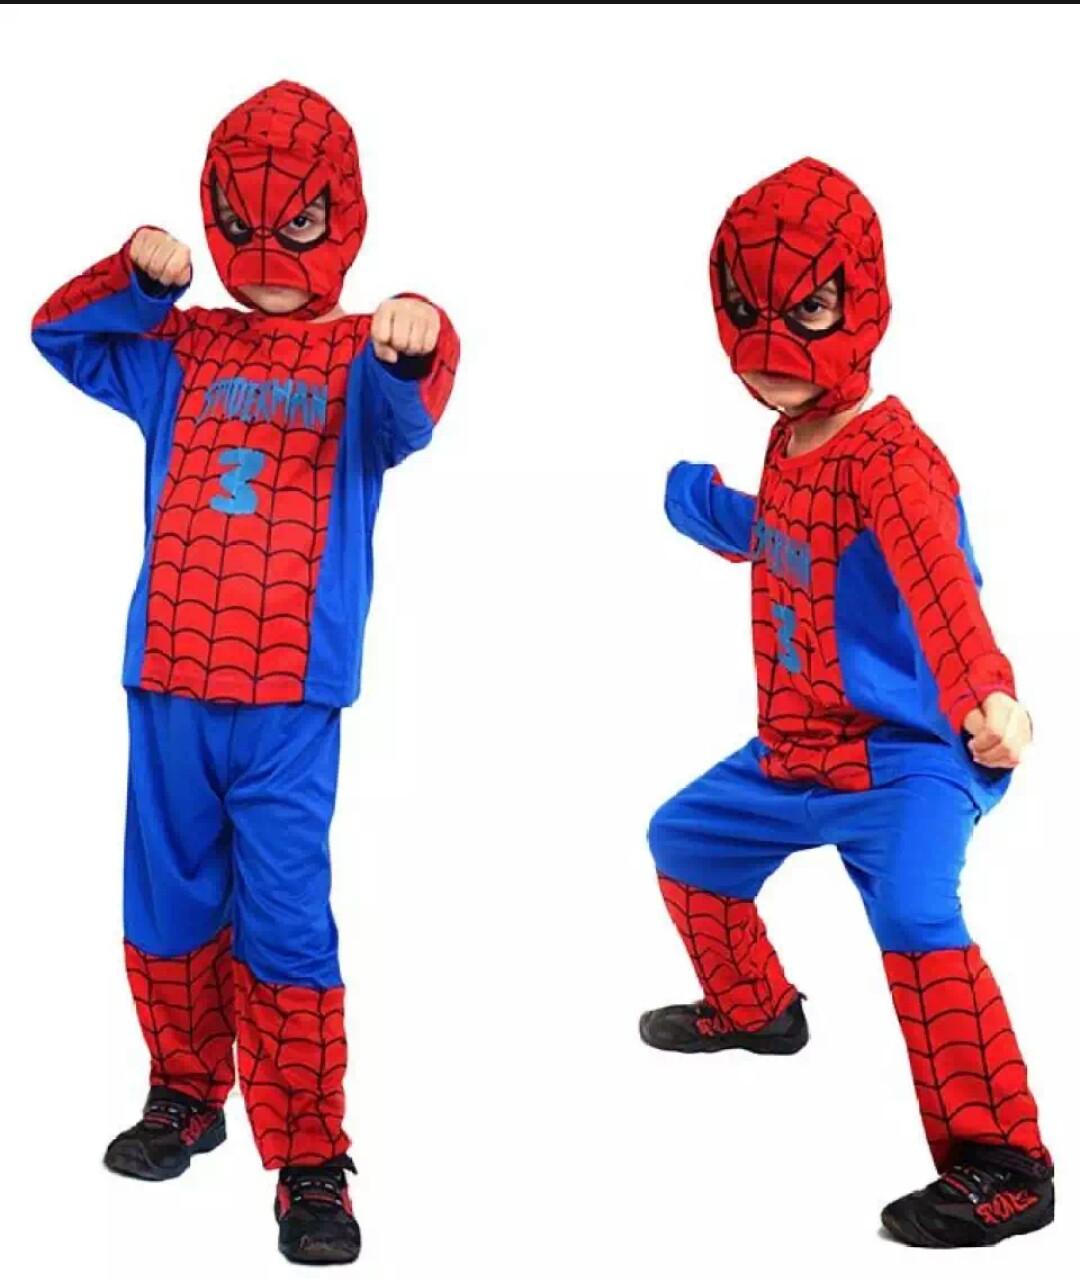 Fiction Superhero Avengers Costumes For Kids